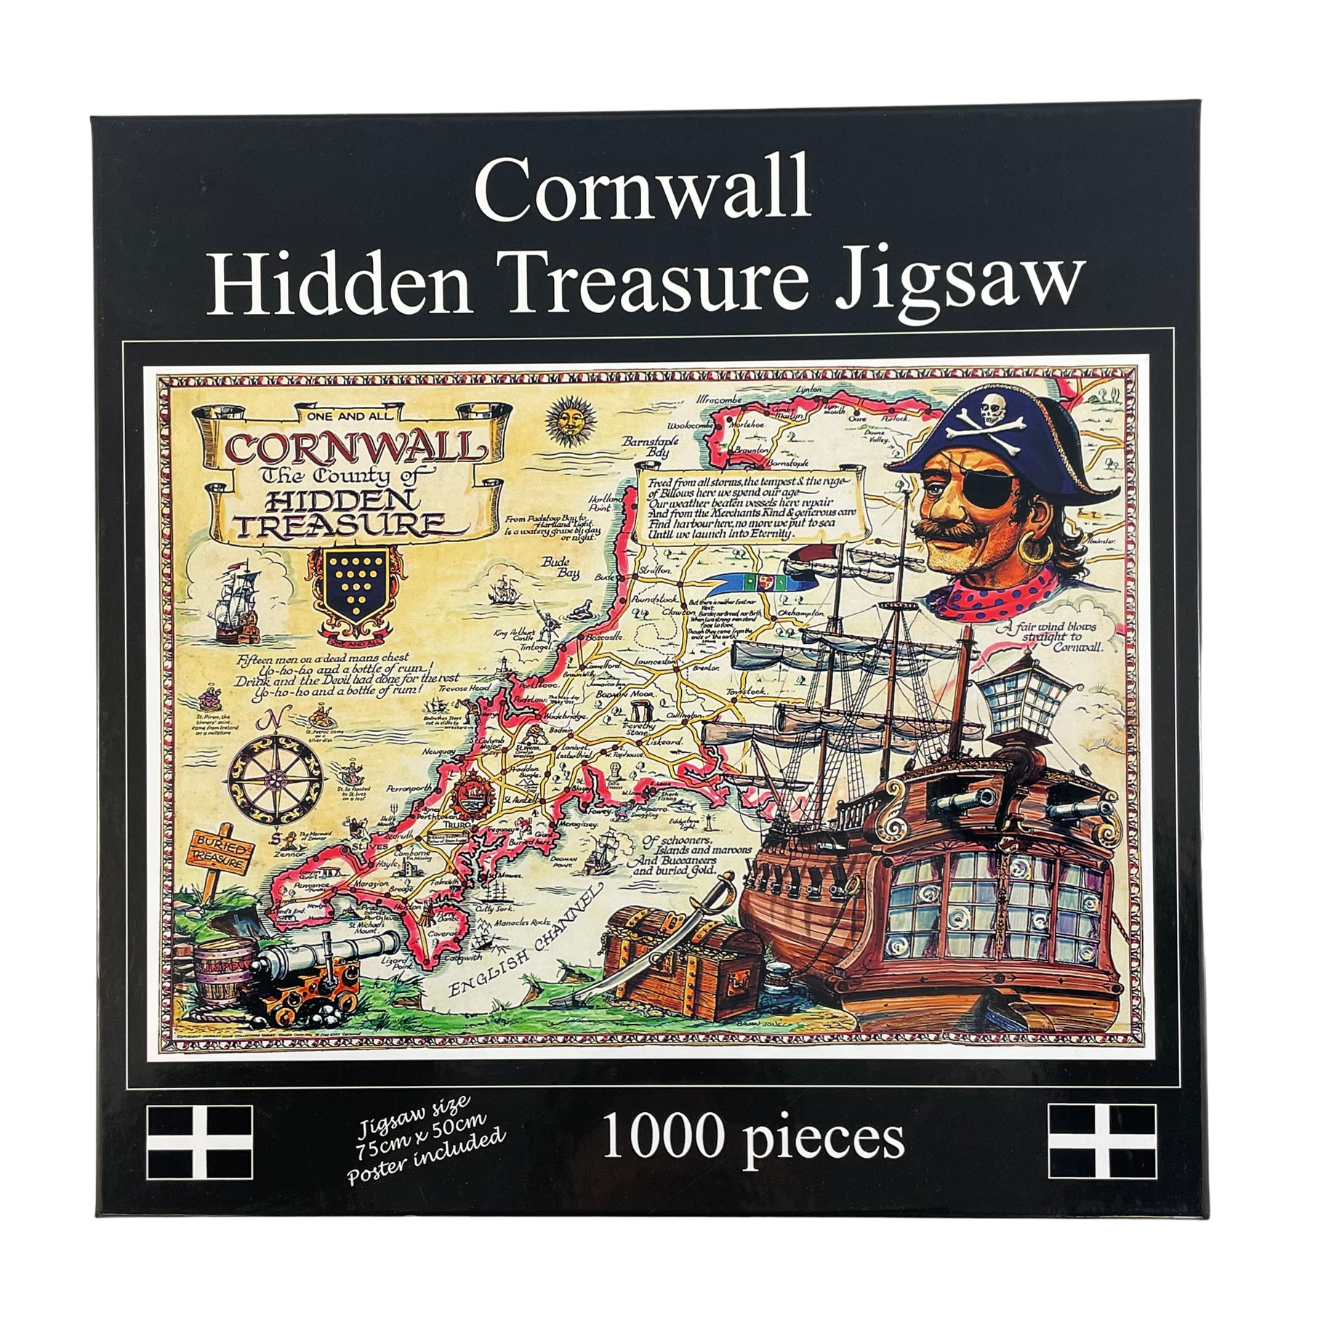 The Cornwall Hidden Treasure 1000 Piece Jigsaw